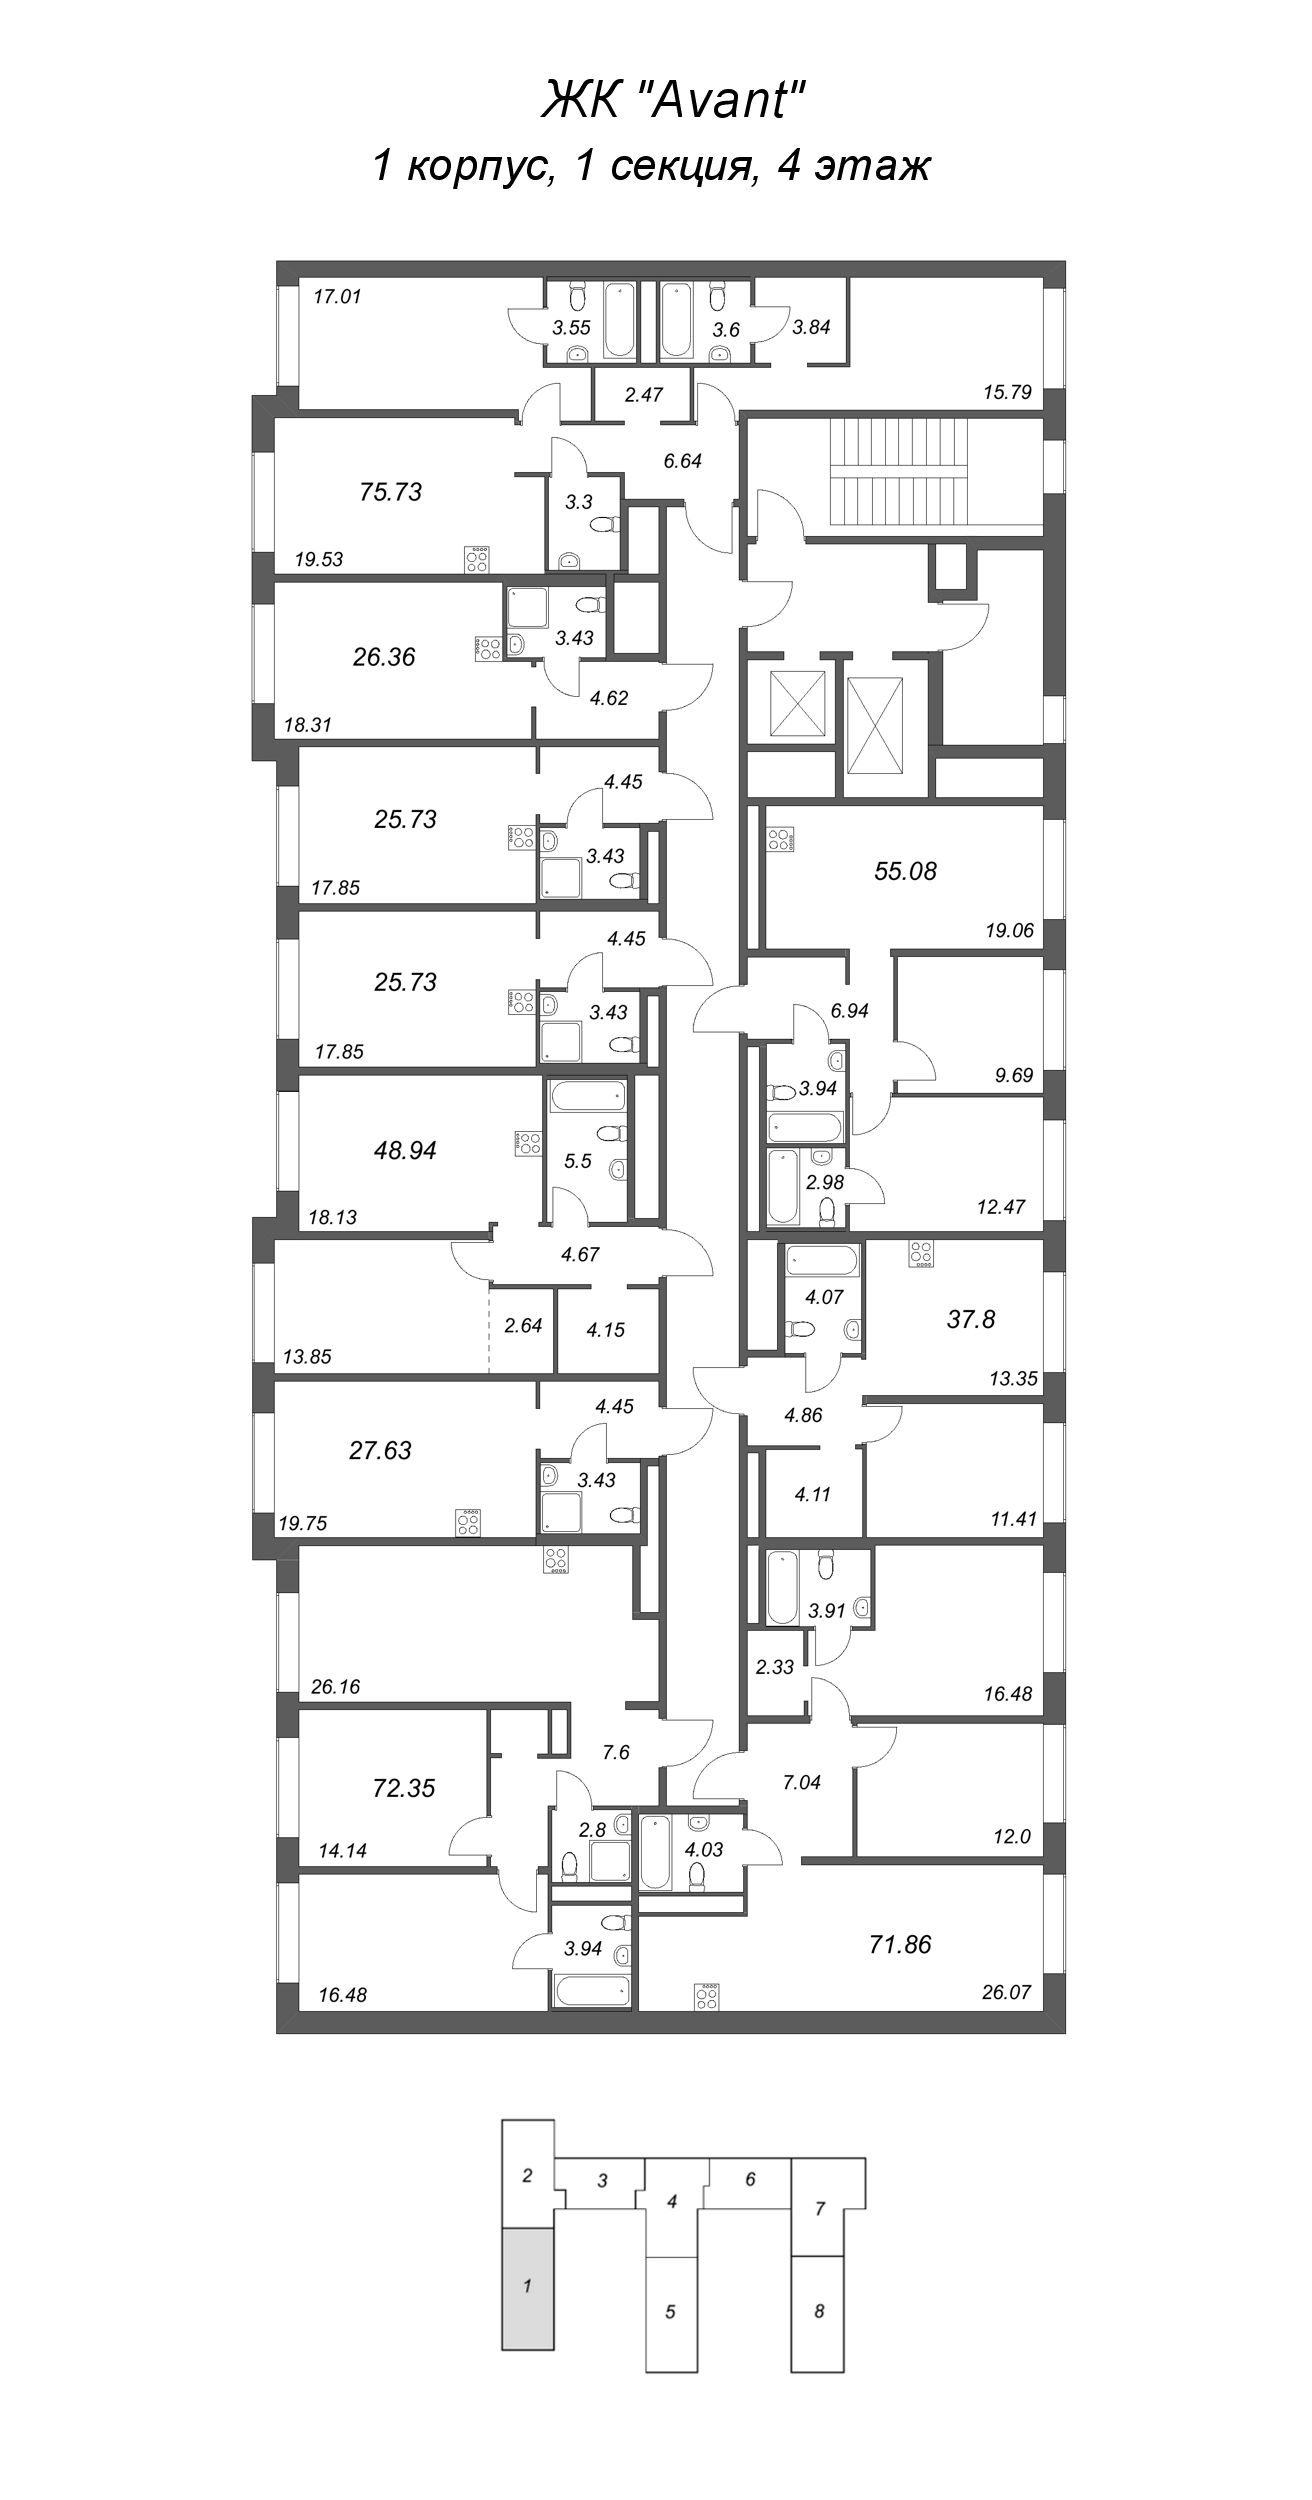 3-комнатная (Евро) квартира, 55.08 м² в ЖК "Avant" - планировка этажа